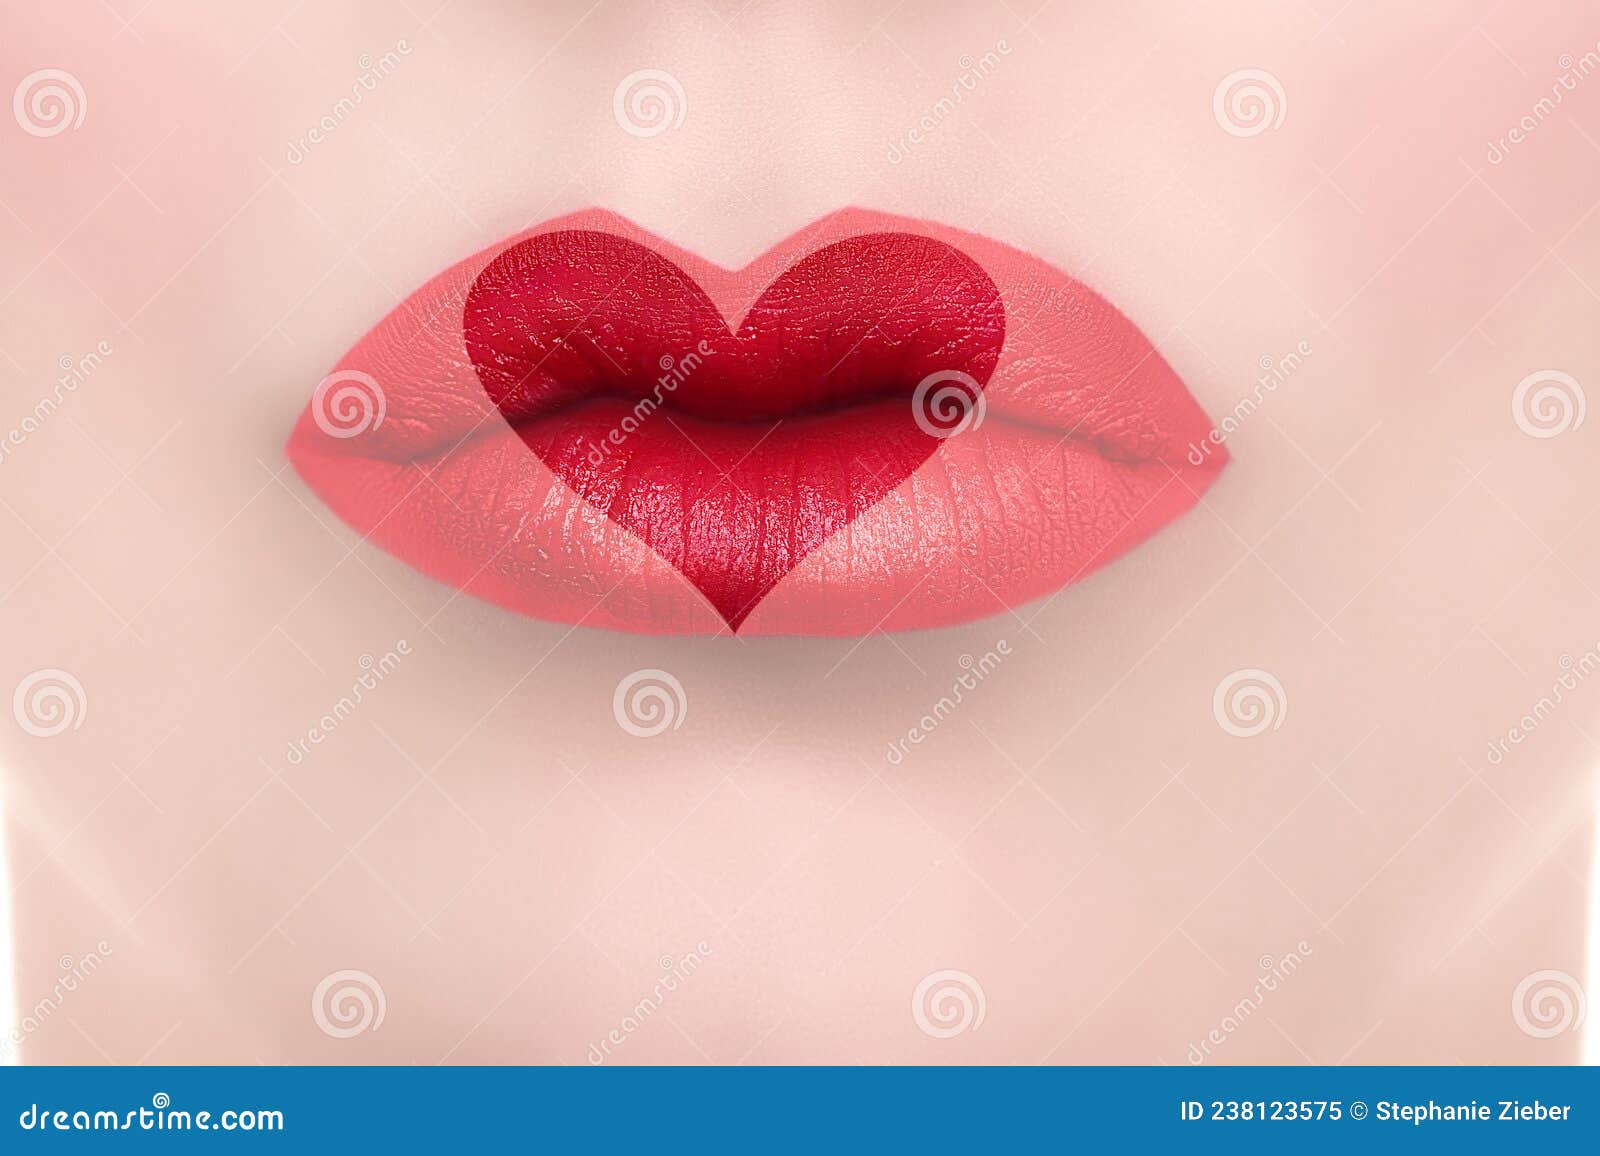 creative valentine`s day heart lips kiss lipstick ad